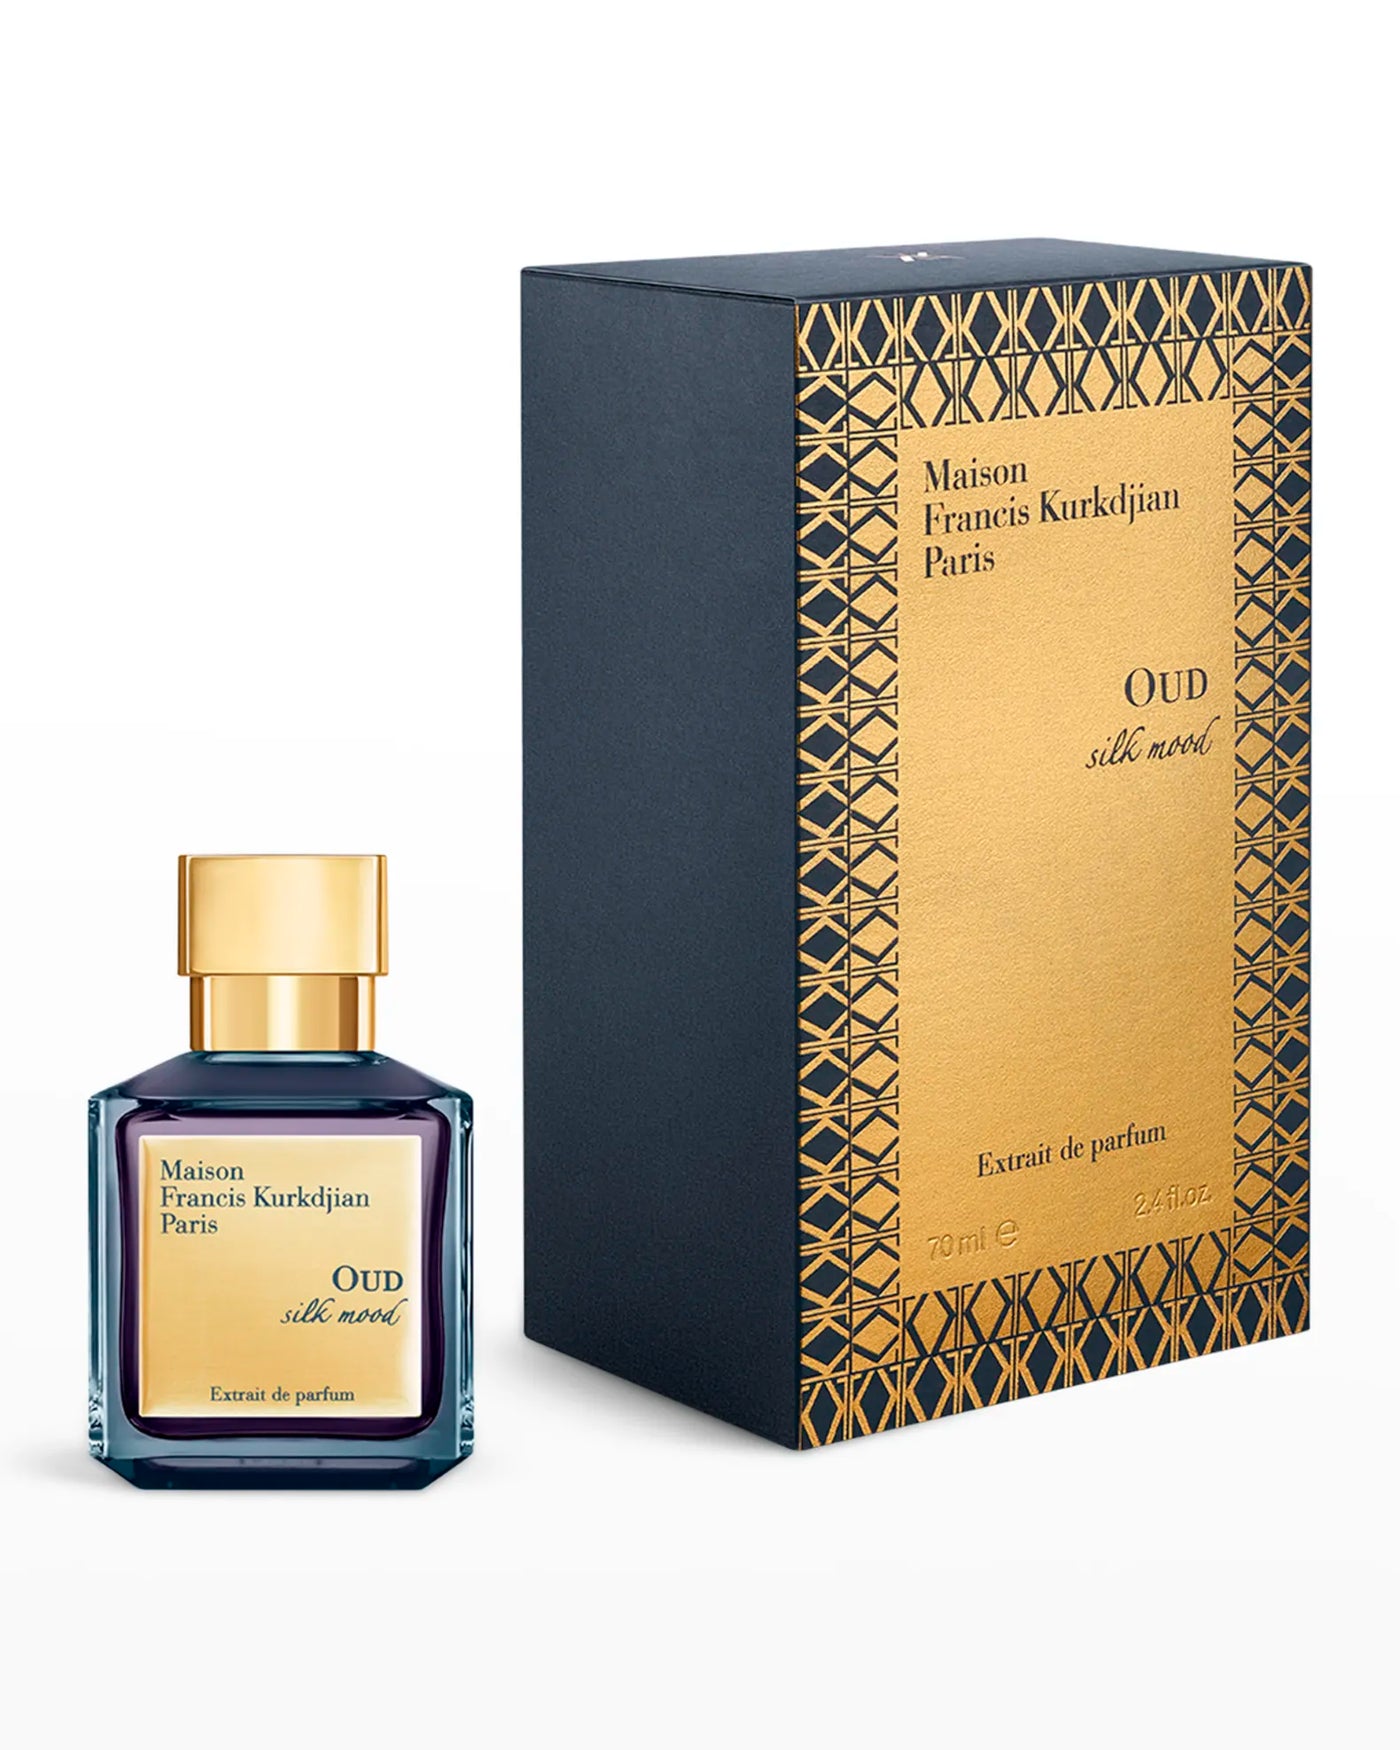 OUD silk mood Extrait de parfum 70ml-